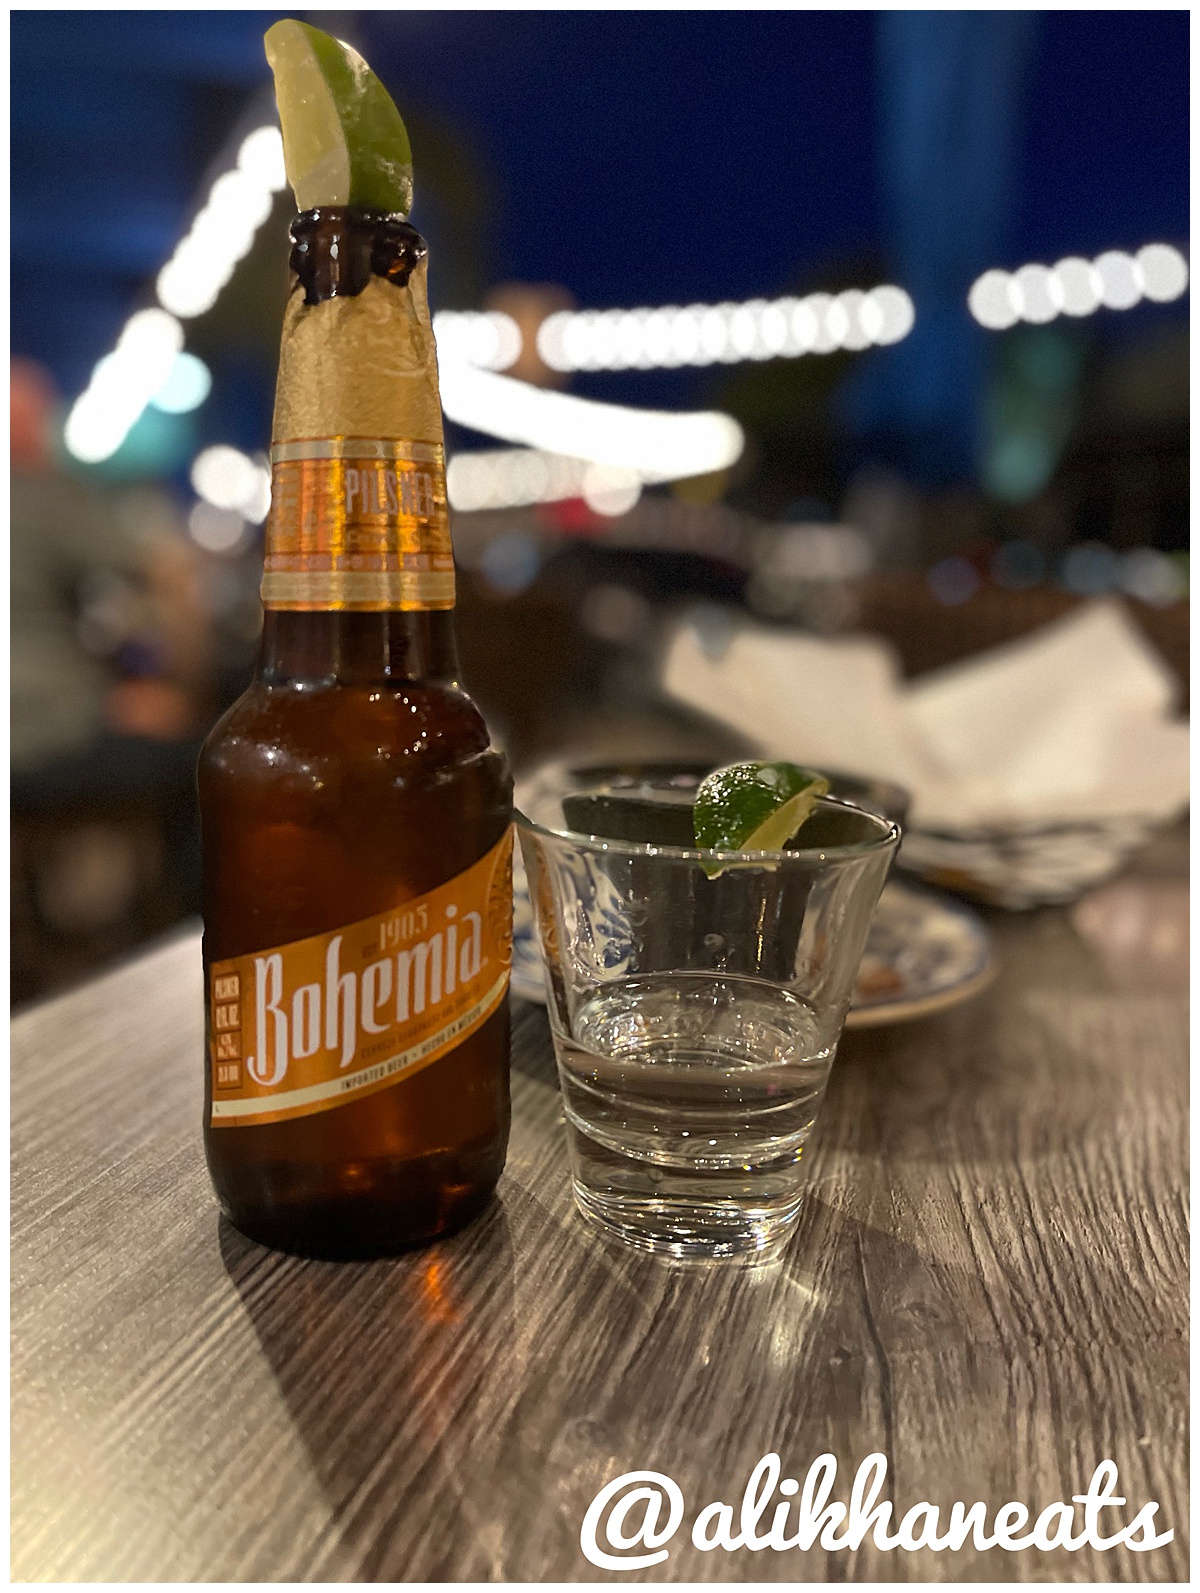 Barrio Queen beer and a shot